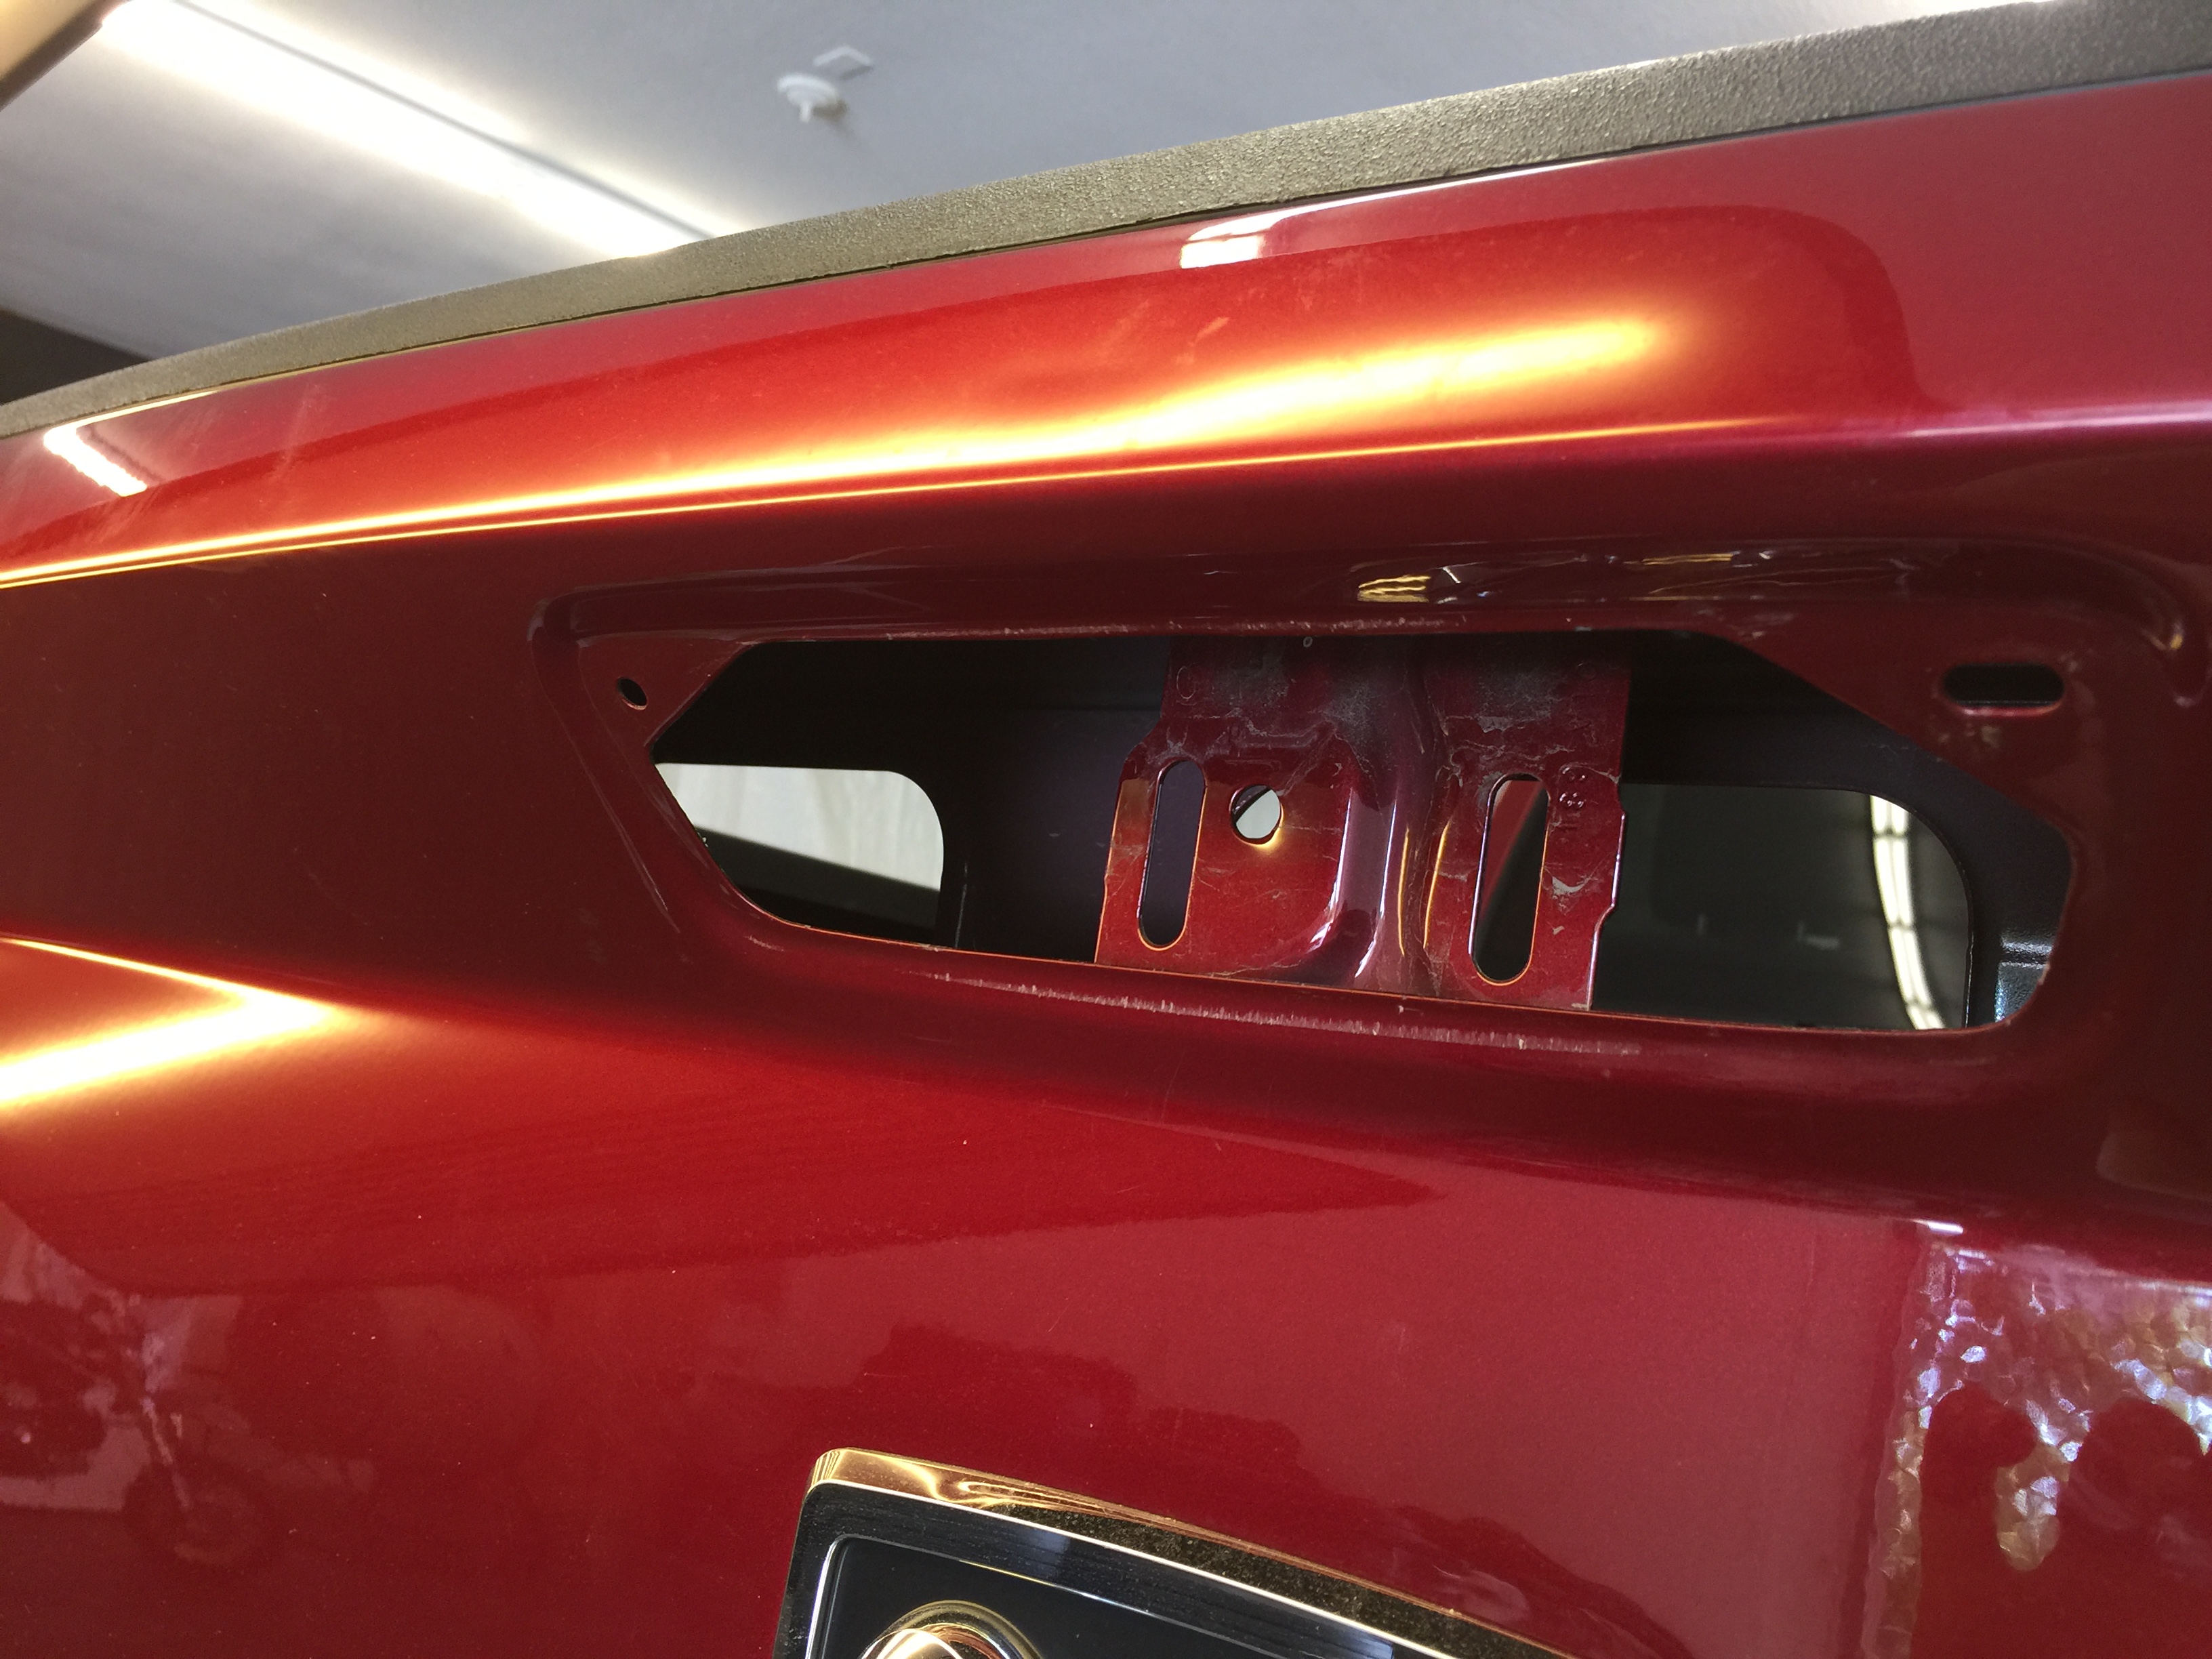 2015 Dodge Ram tailgate Dent repair in Springfield, IL, by Michael Bocek of http://217dent.com 217 dent Paintless Dent Repair